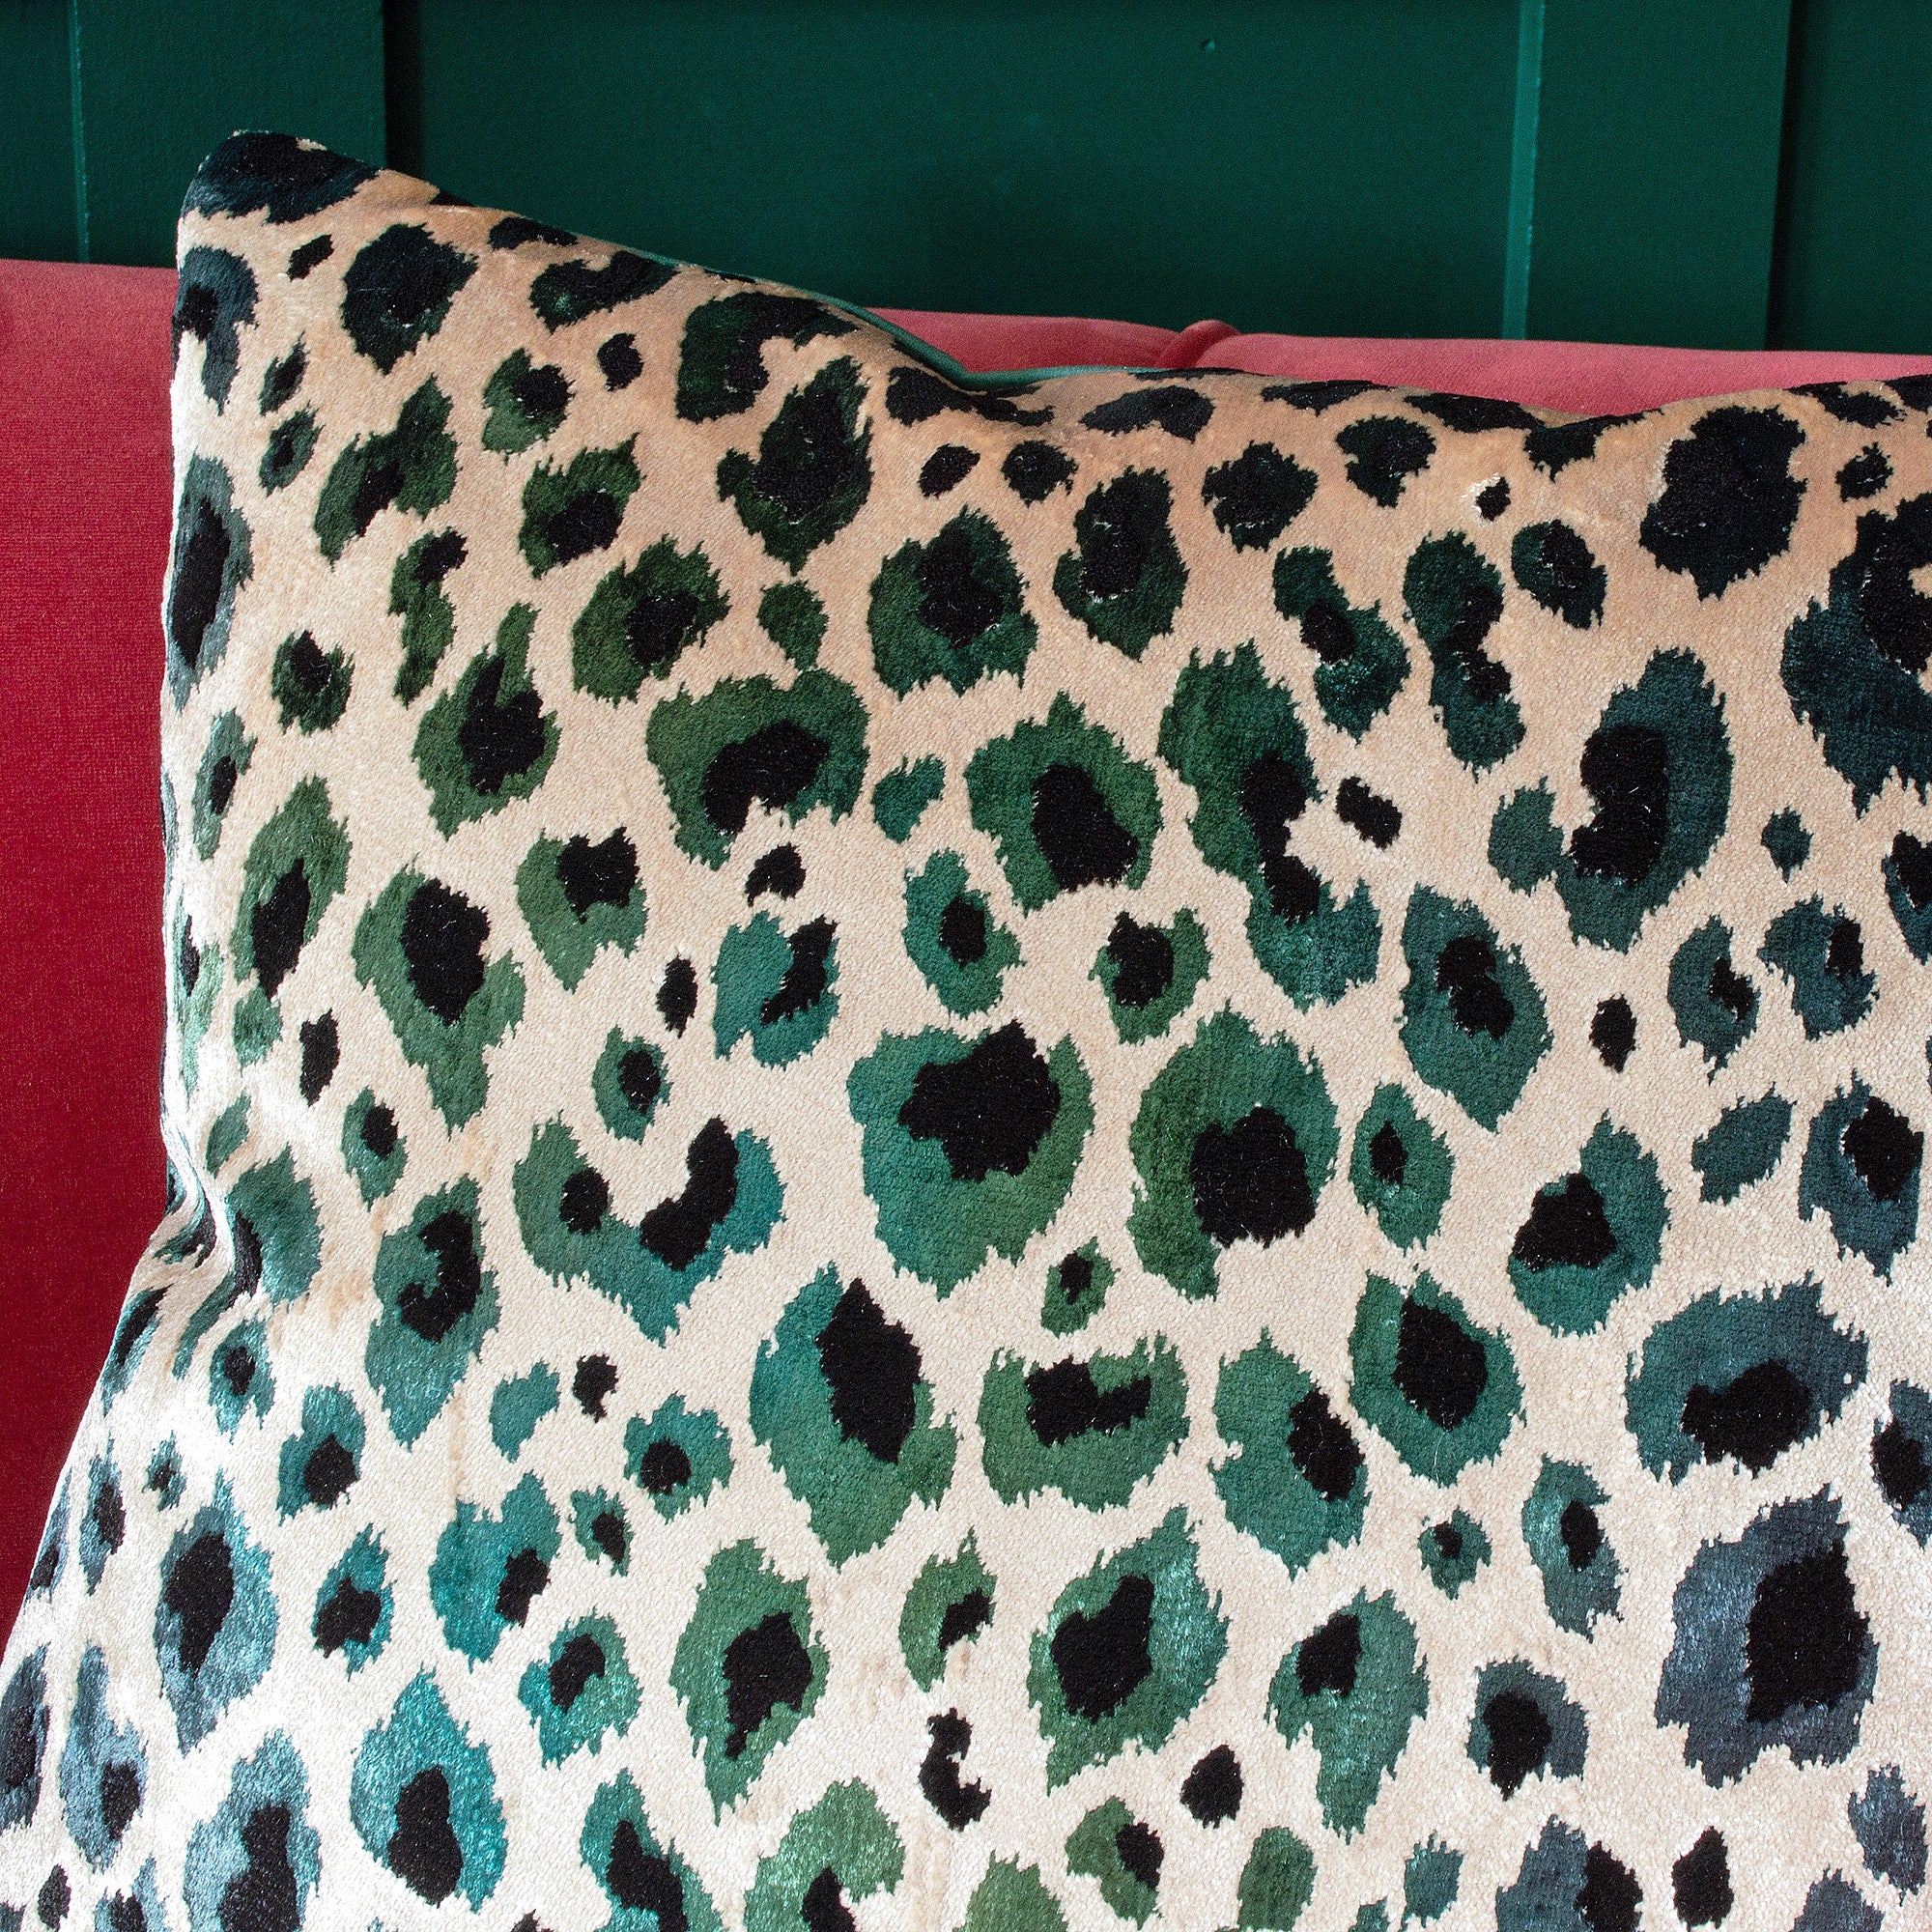 Handmade Serpentine Leopard Print Cushion